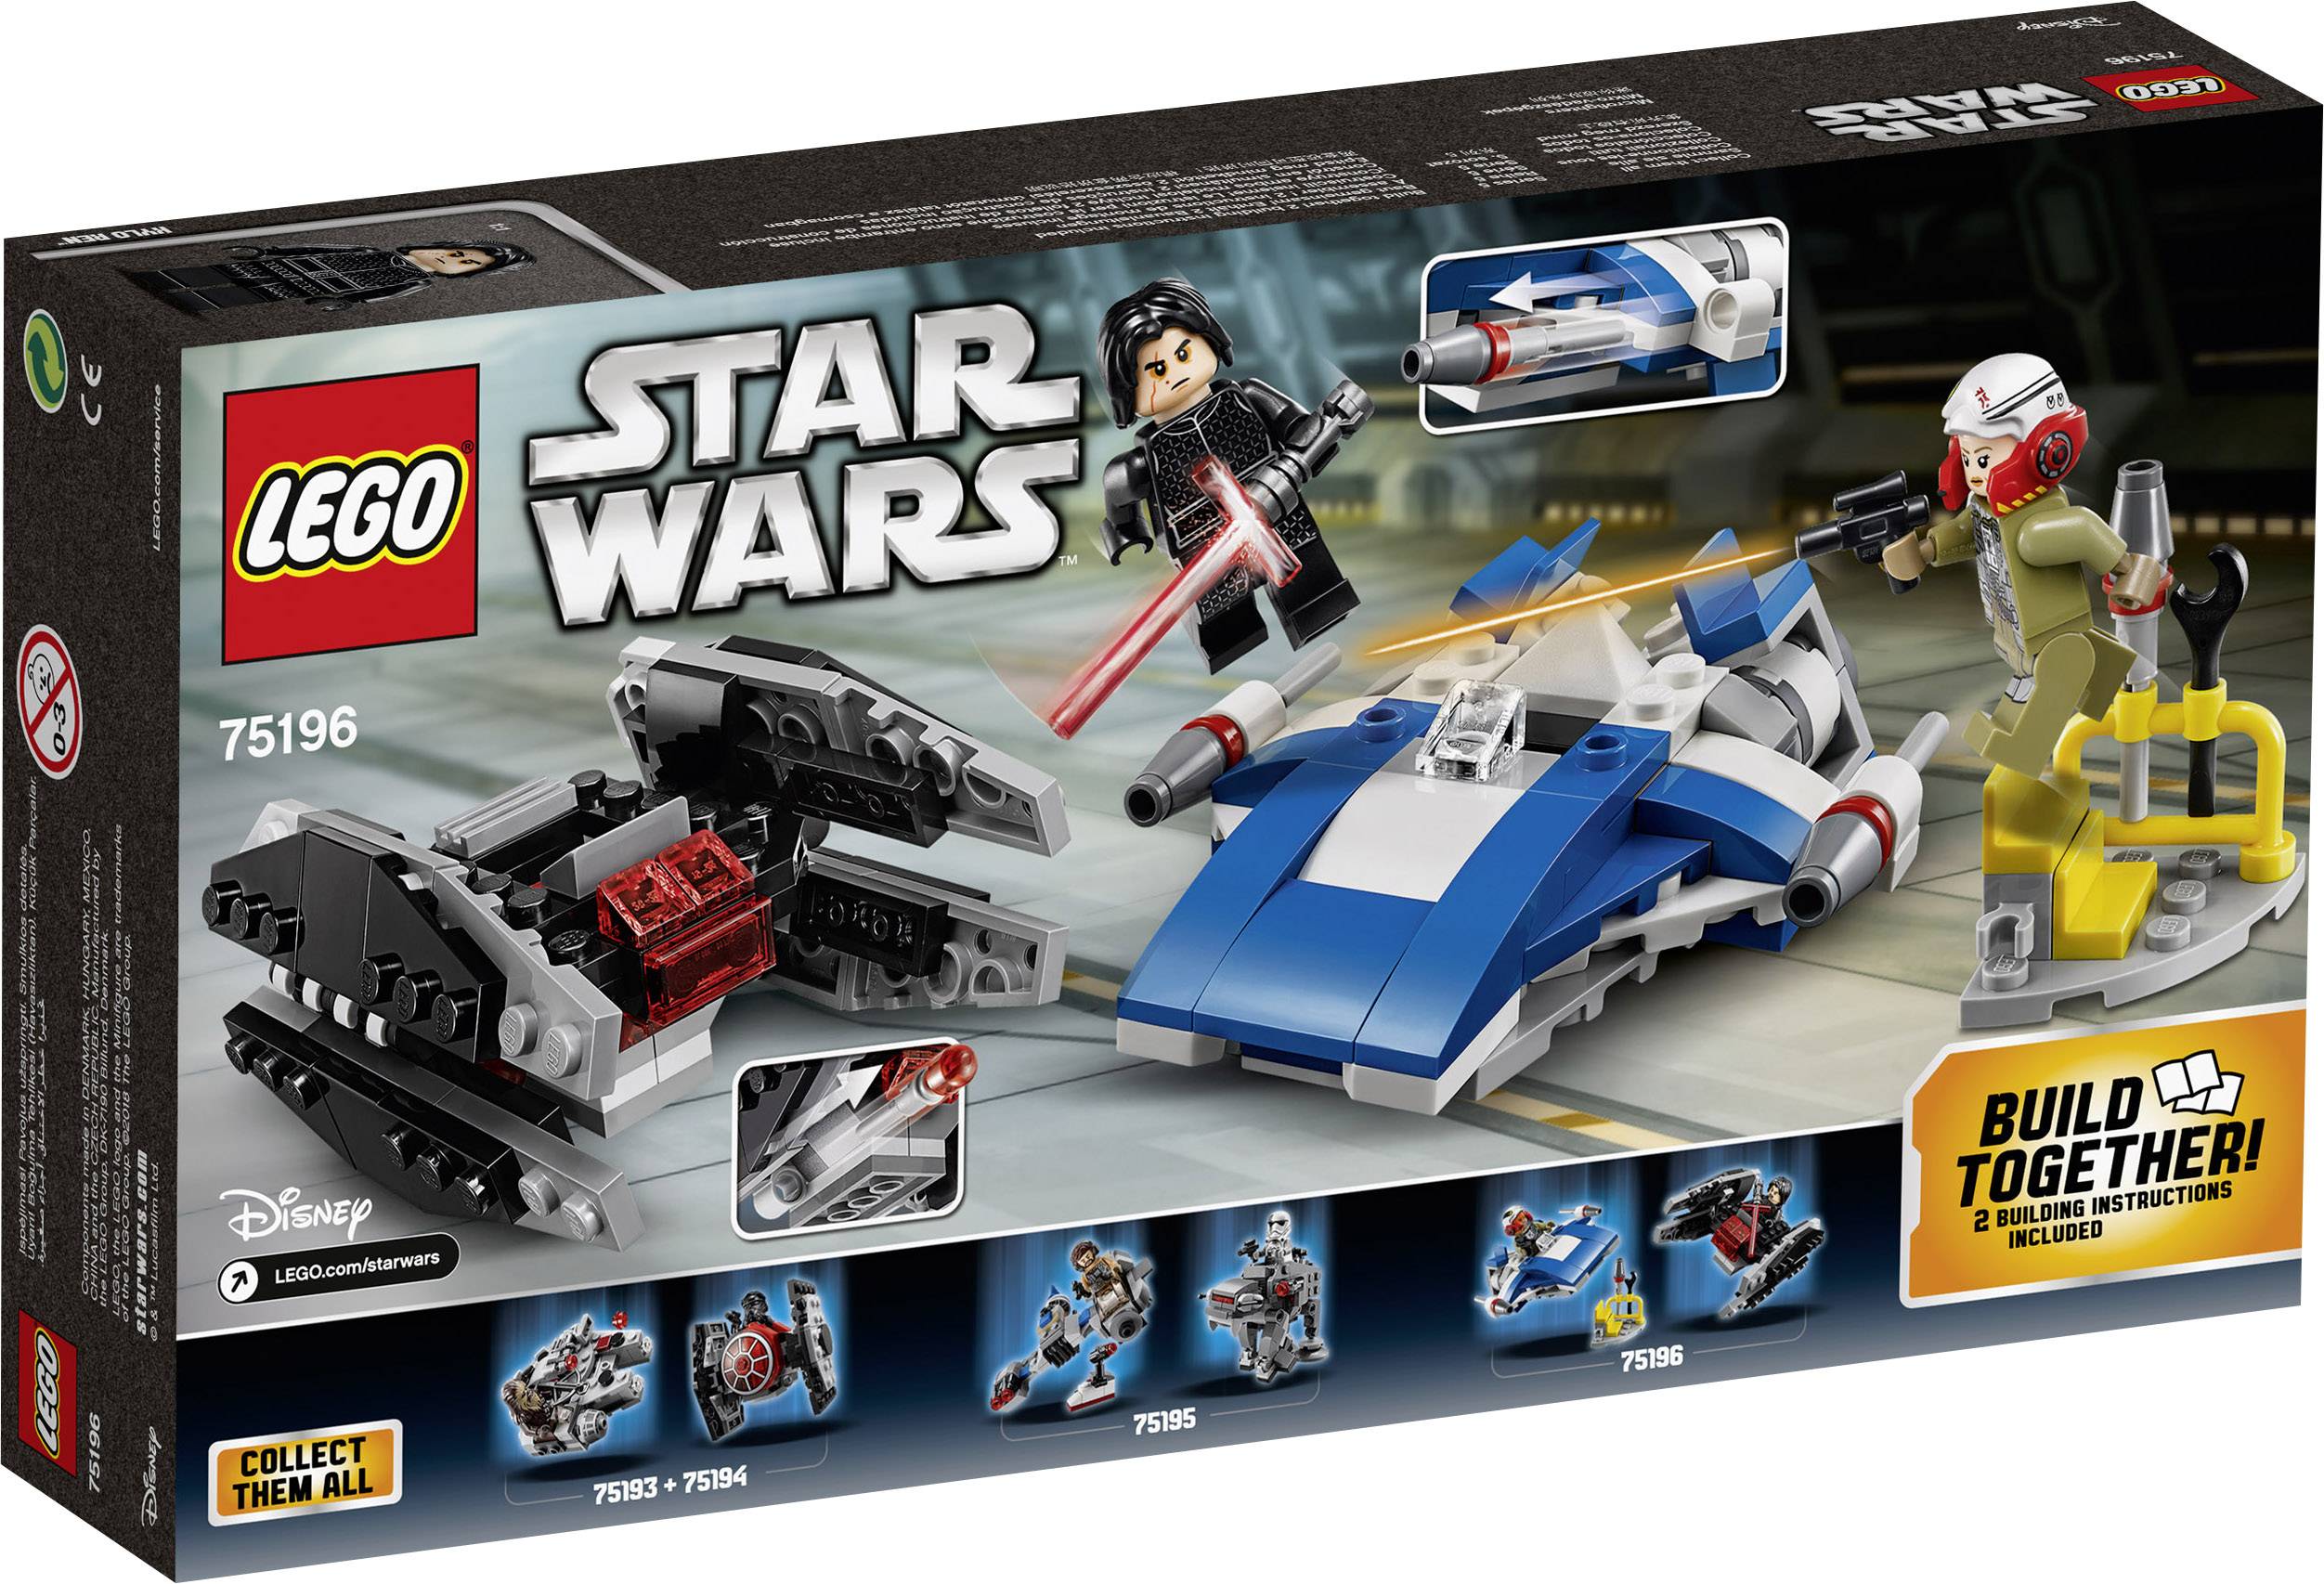 LEGO ® Star Wars ™ PERSONNAGE A-Wing-Pilote tallissan Lintra sw884 de 75196 avec arme 